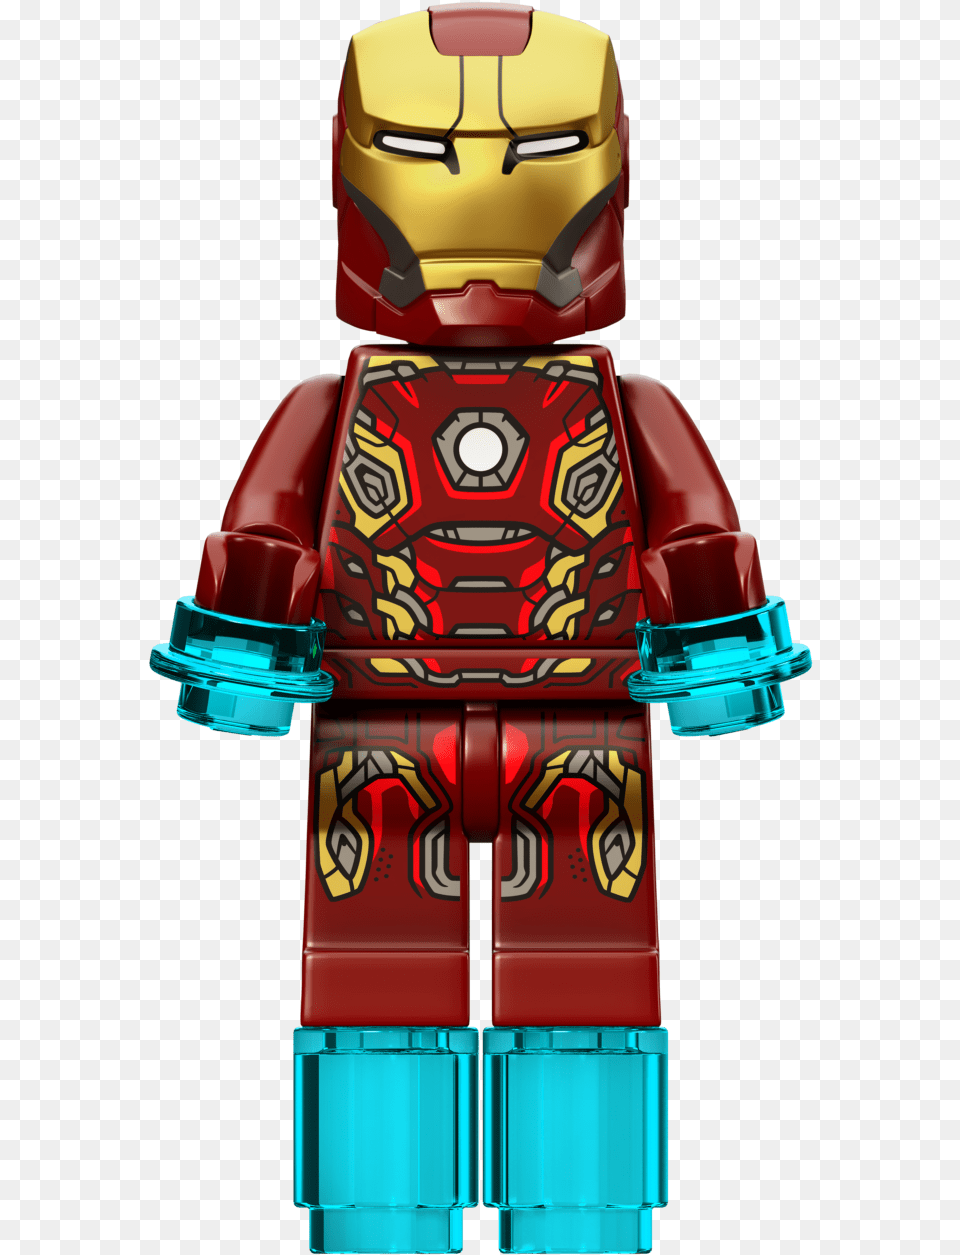 Lego Ironman Lego Iron Man, Robot, Dynamite, Weapon Free Transparent Png